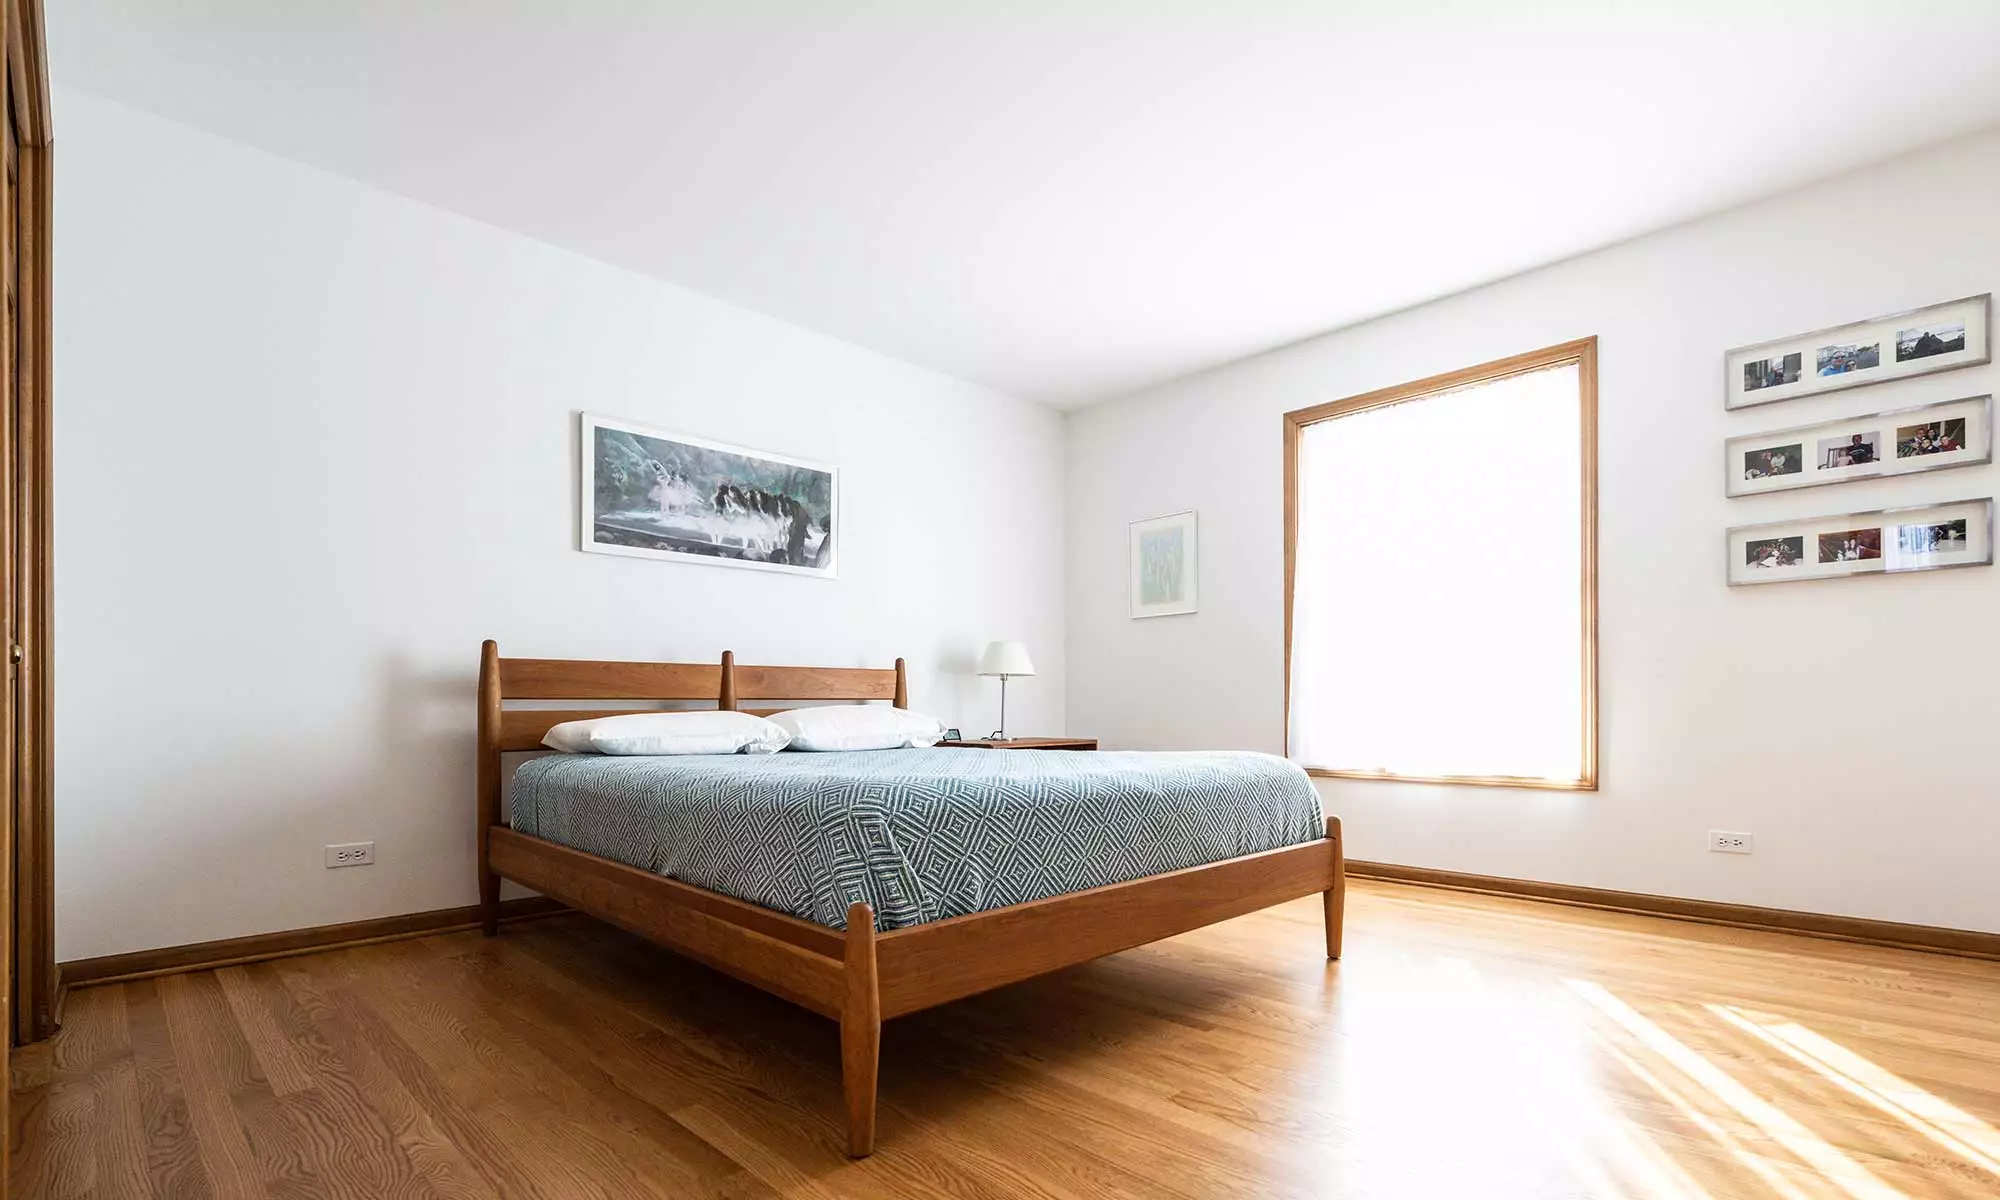 Scandinavian style wood bed in bedroom remodel in wheaton, illinois